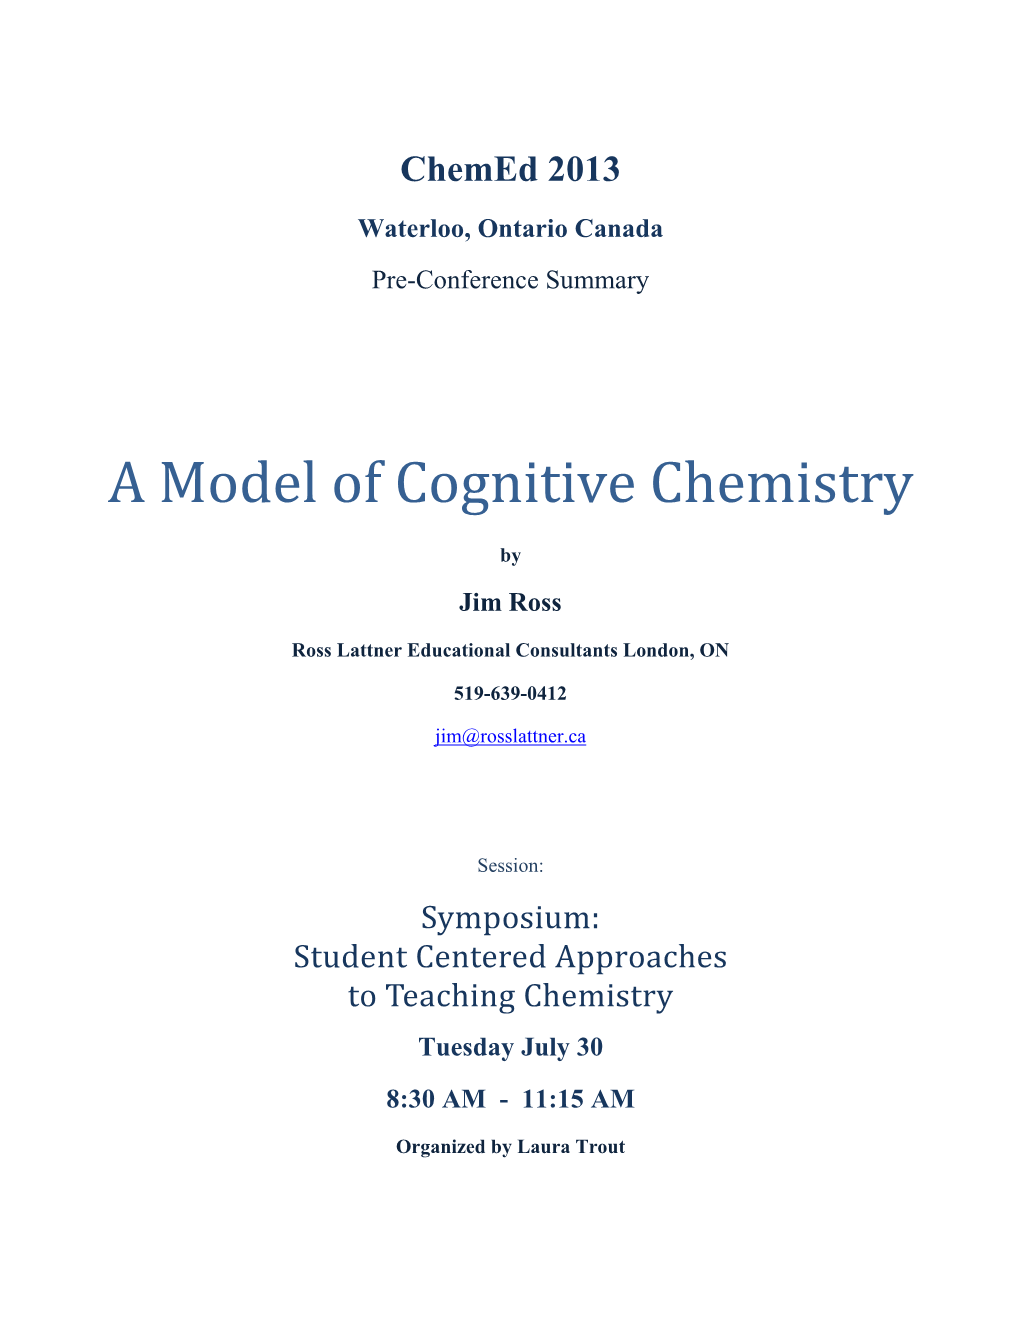 A Model of Cognitive Chemistry